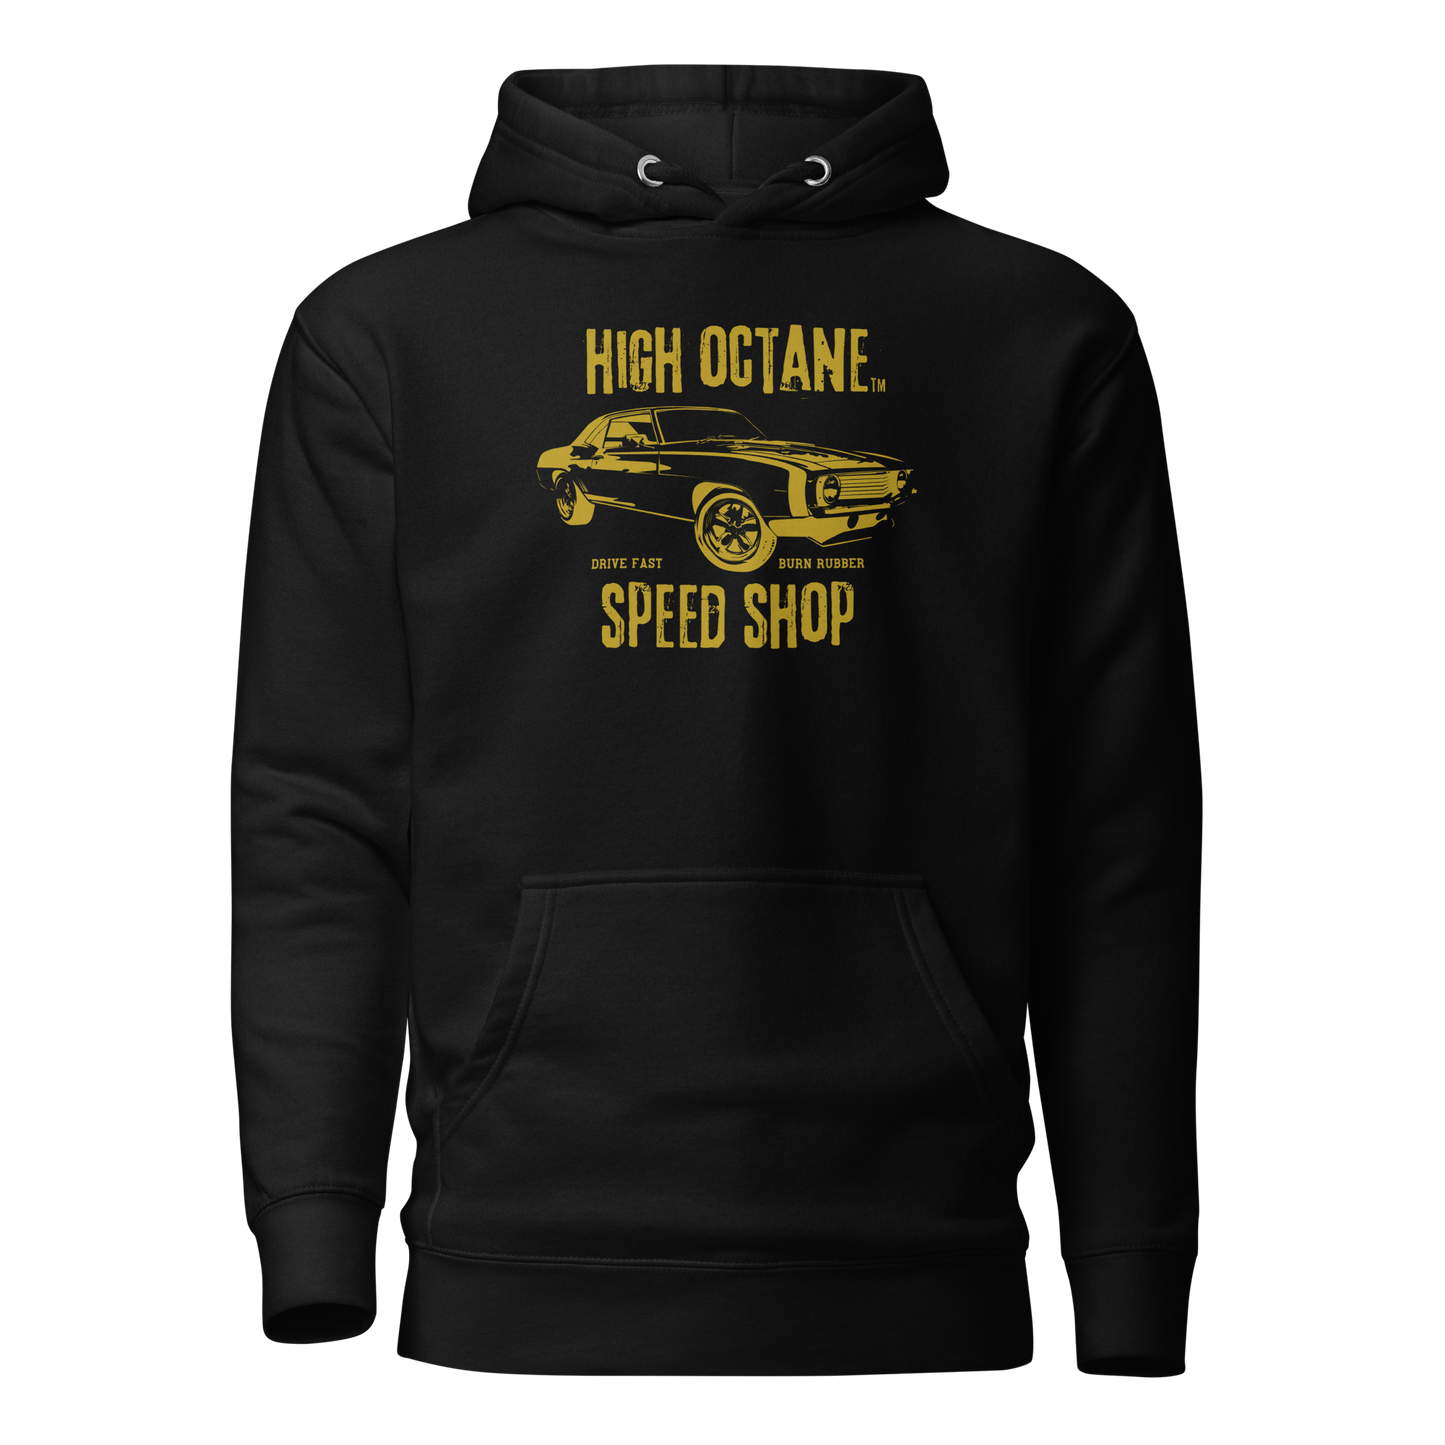 High Octane Speed Shop™ Premium Hoodie | Cotton Heritage M2580 Front